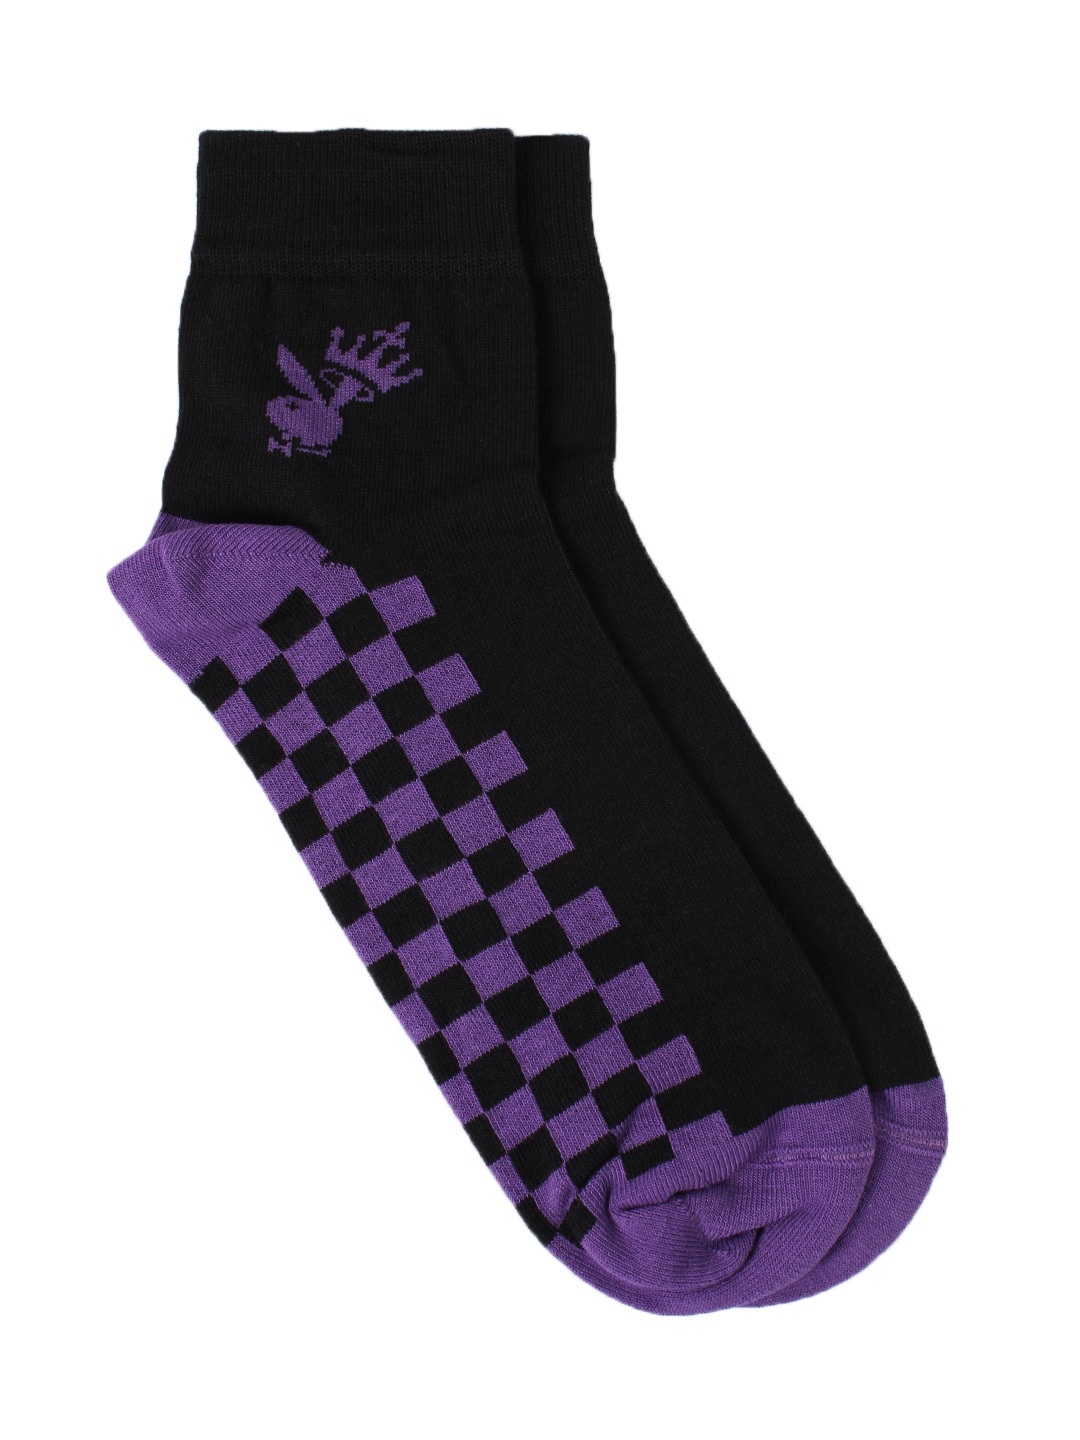 Playboy Men Purple & Black Socks